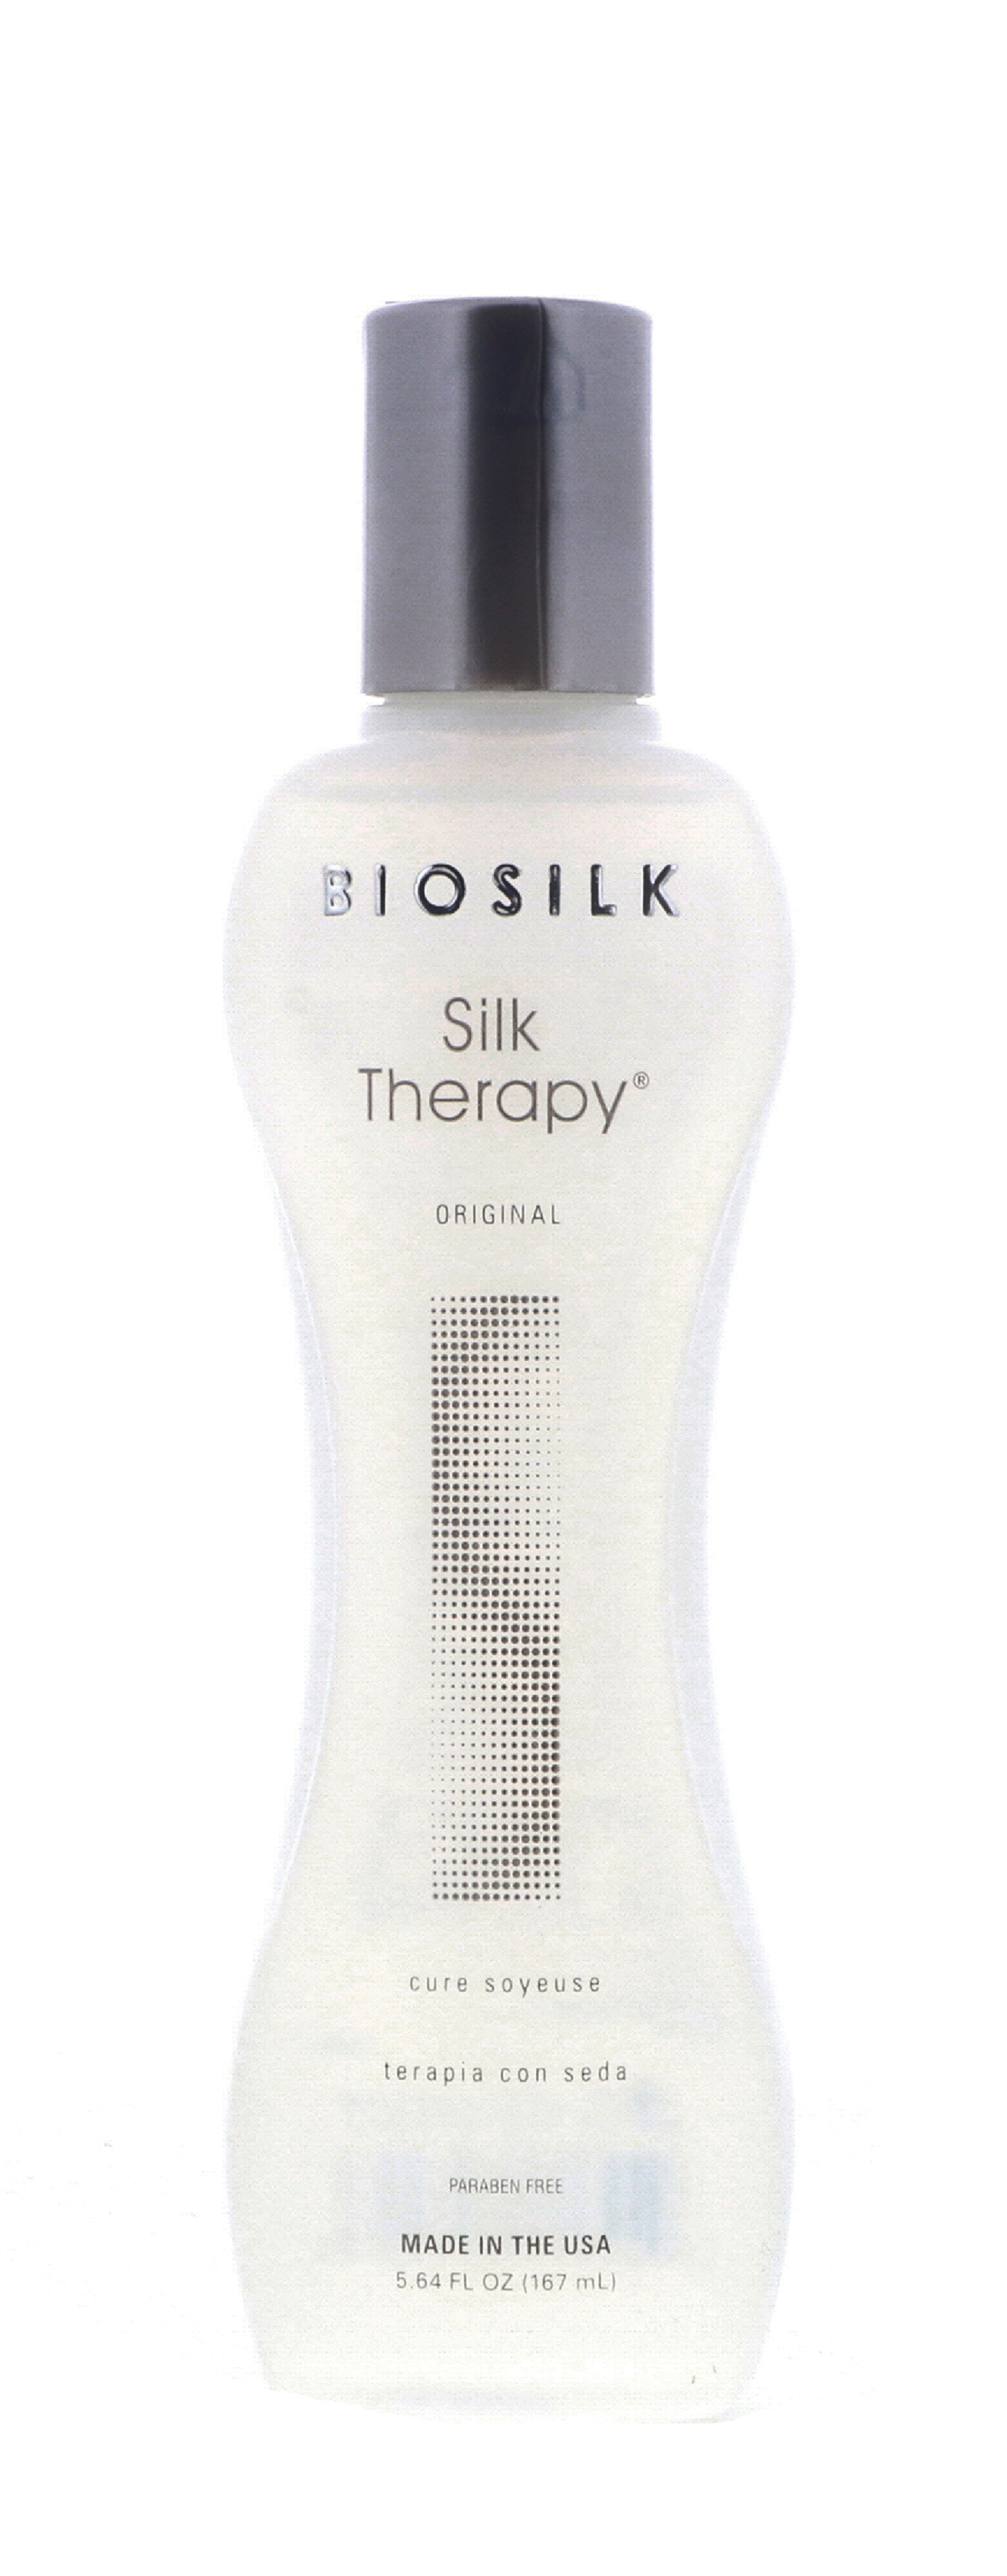 BioSilk Silk Therapy, Original, 5.64 oz